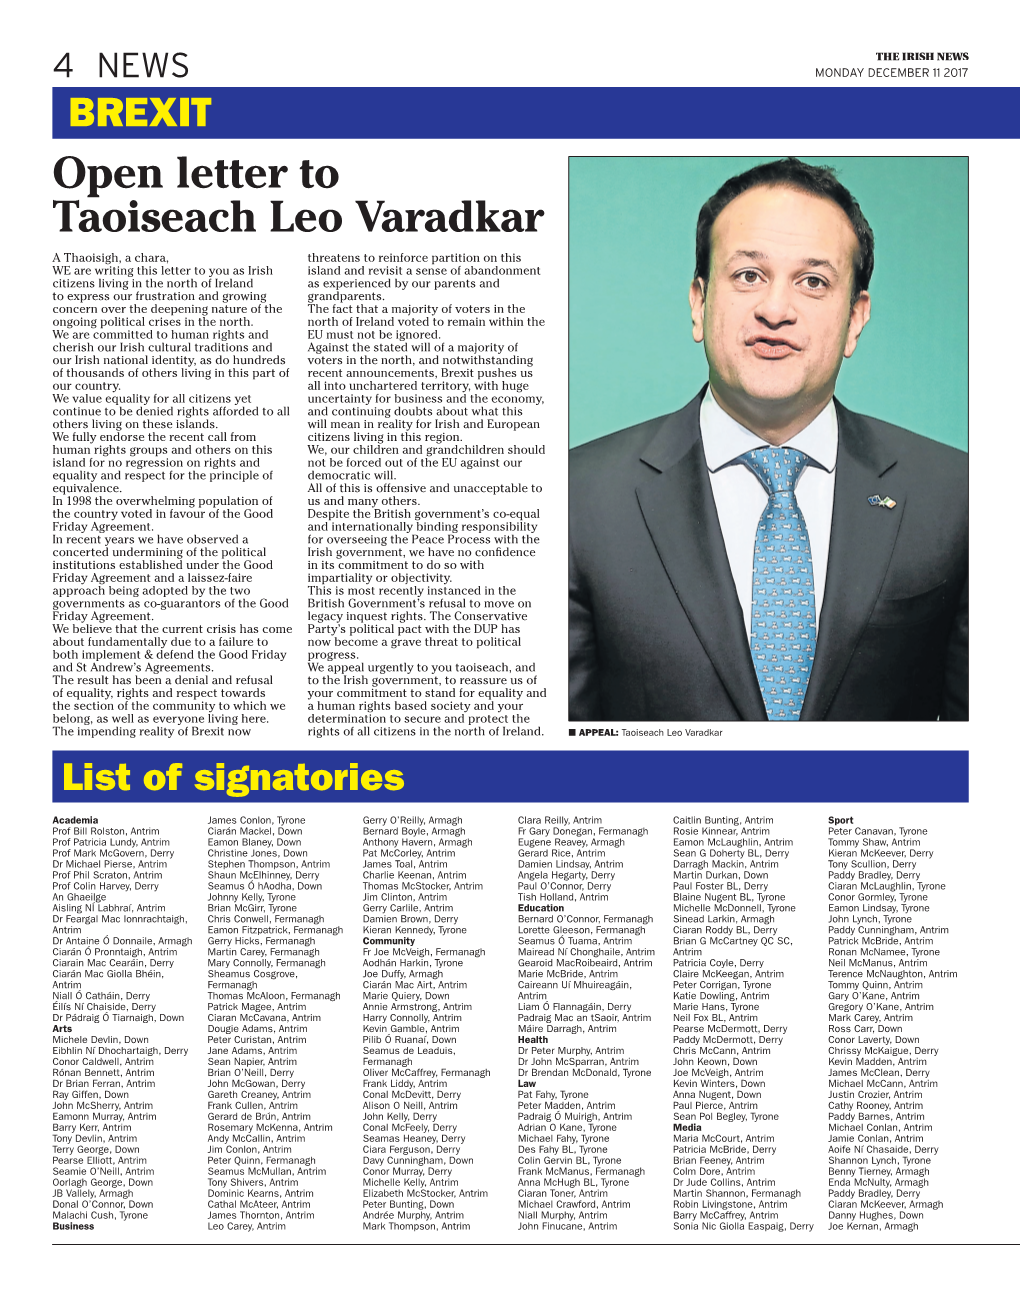 Open Letter to Taoiseach Leo Varadkar